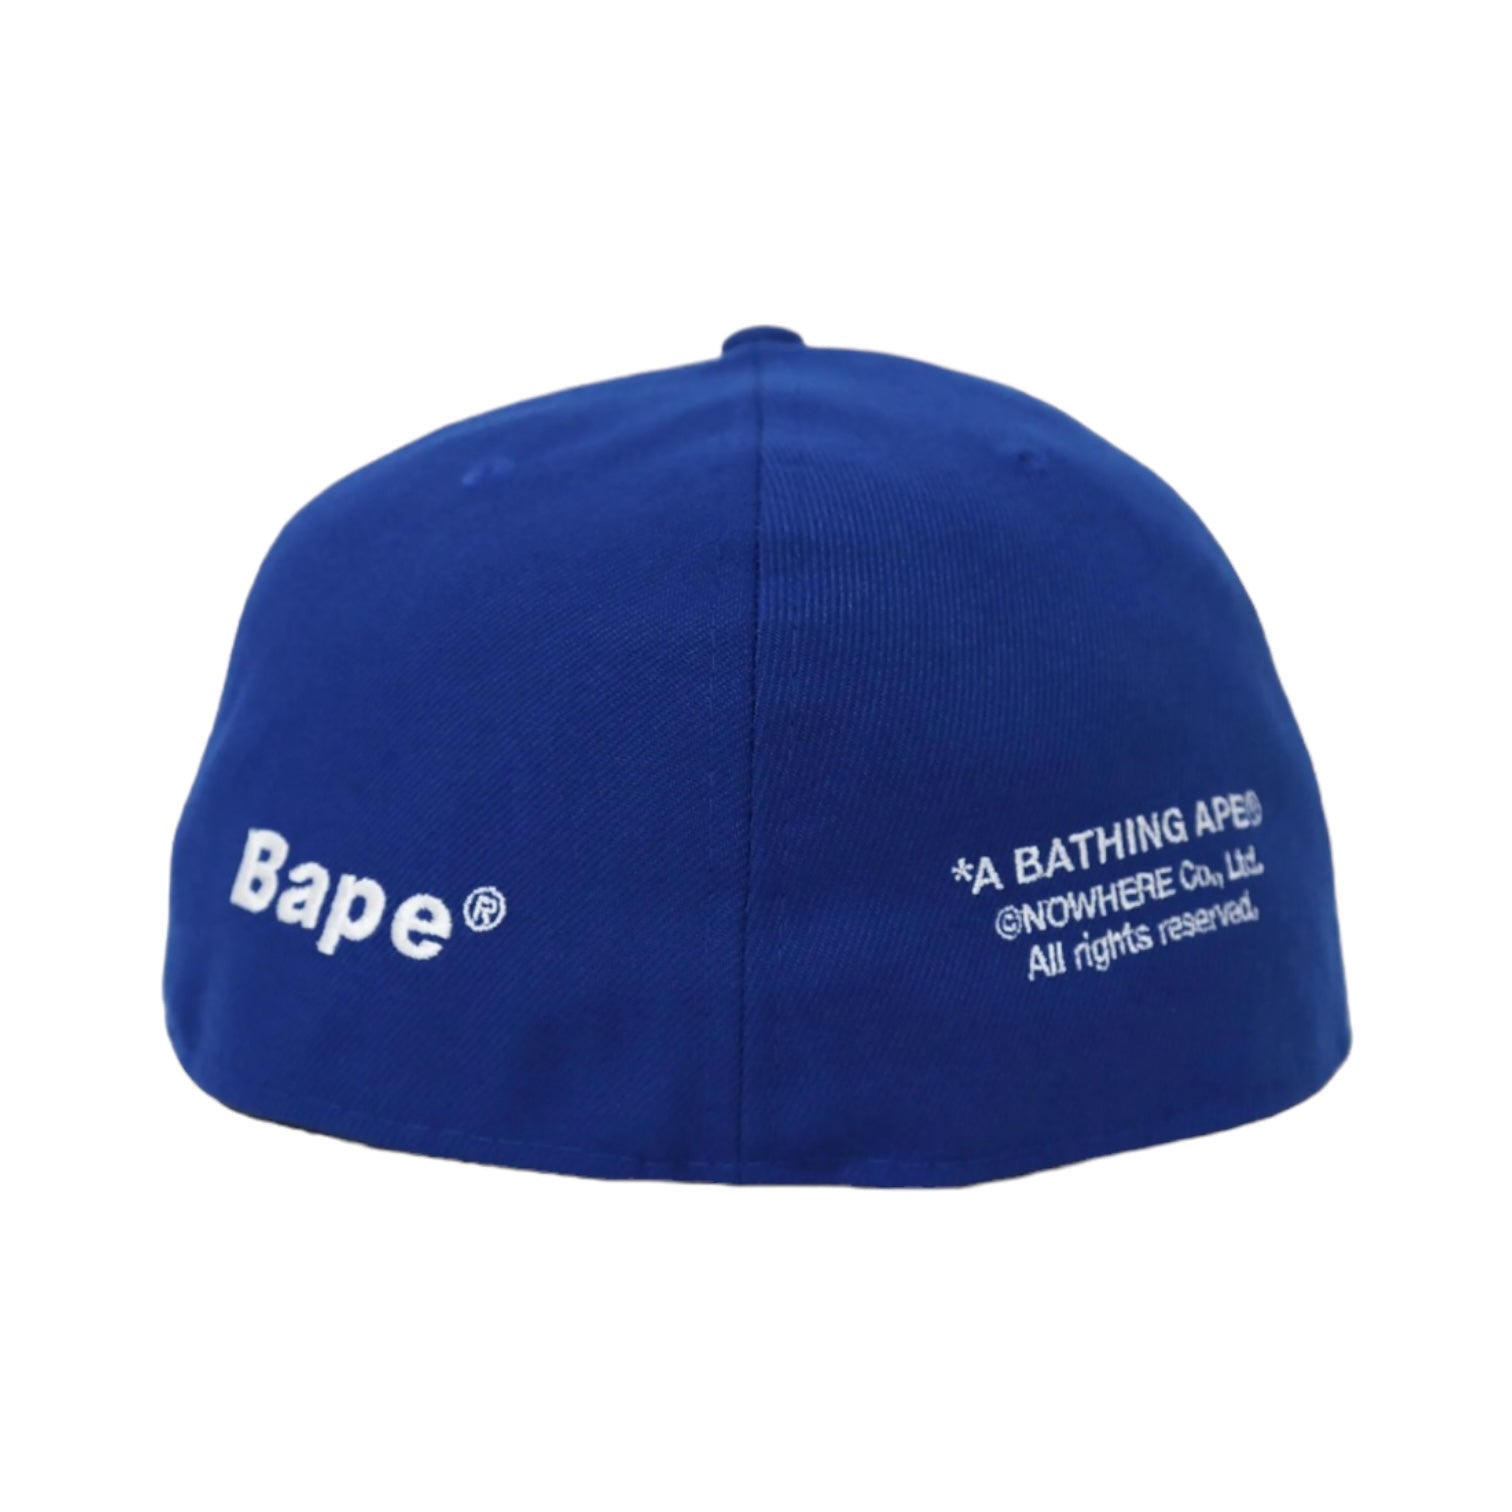 Bape x New Era A Bathing Ape Fitted Blue